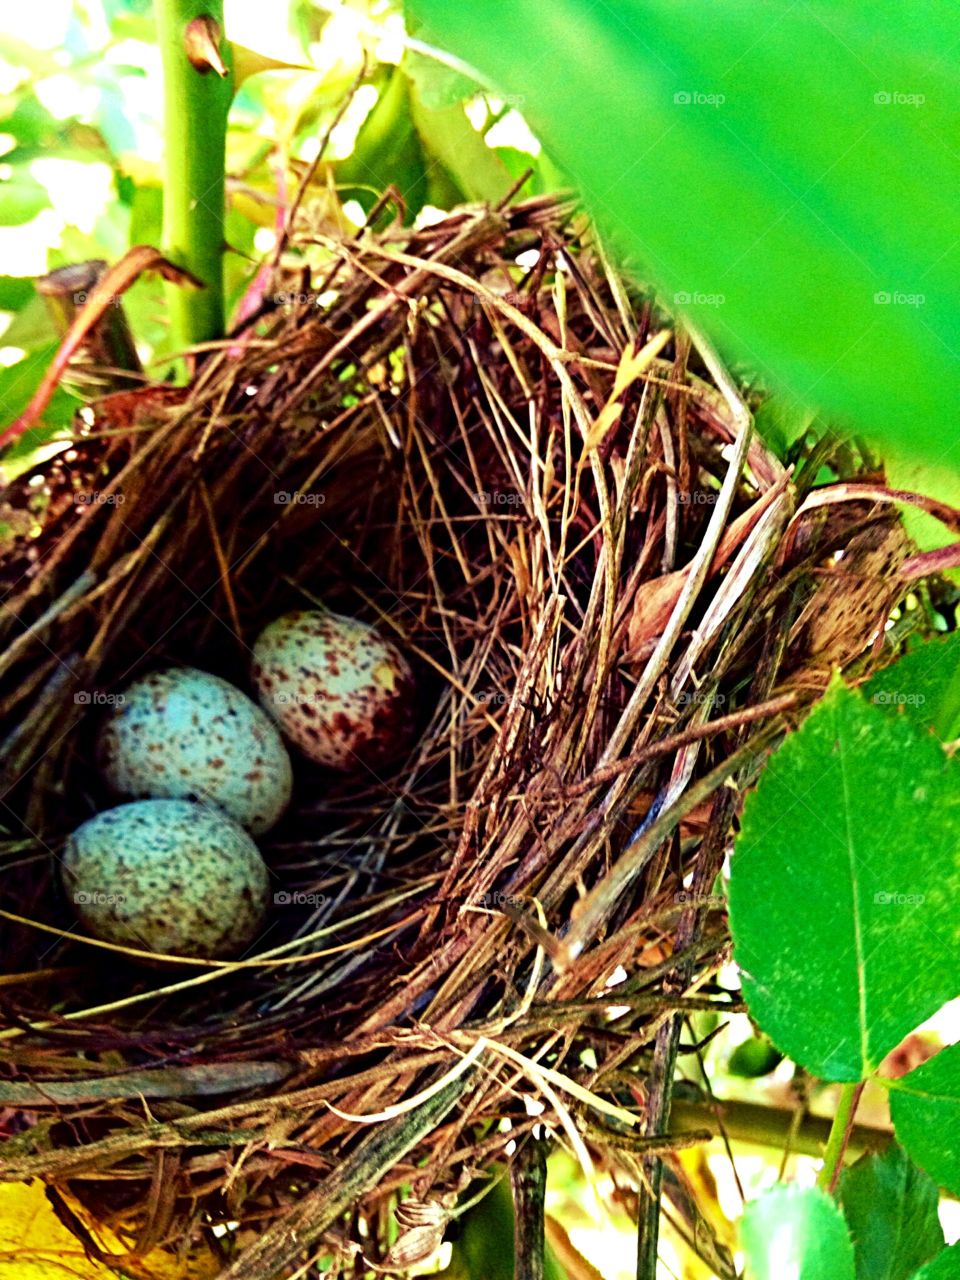 Cardinal nest 